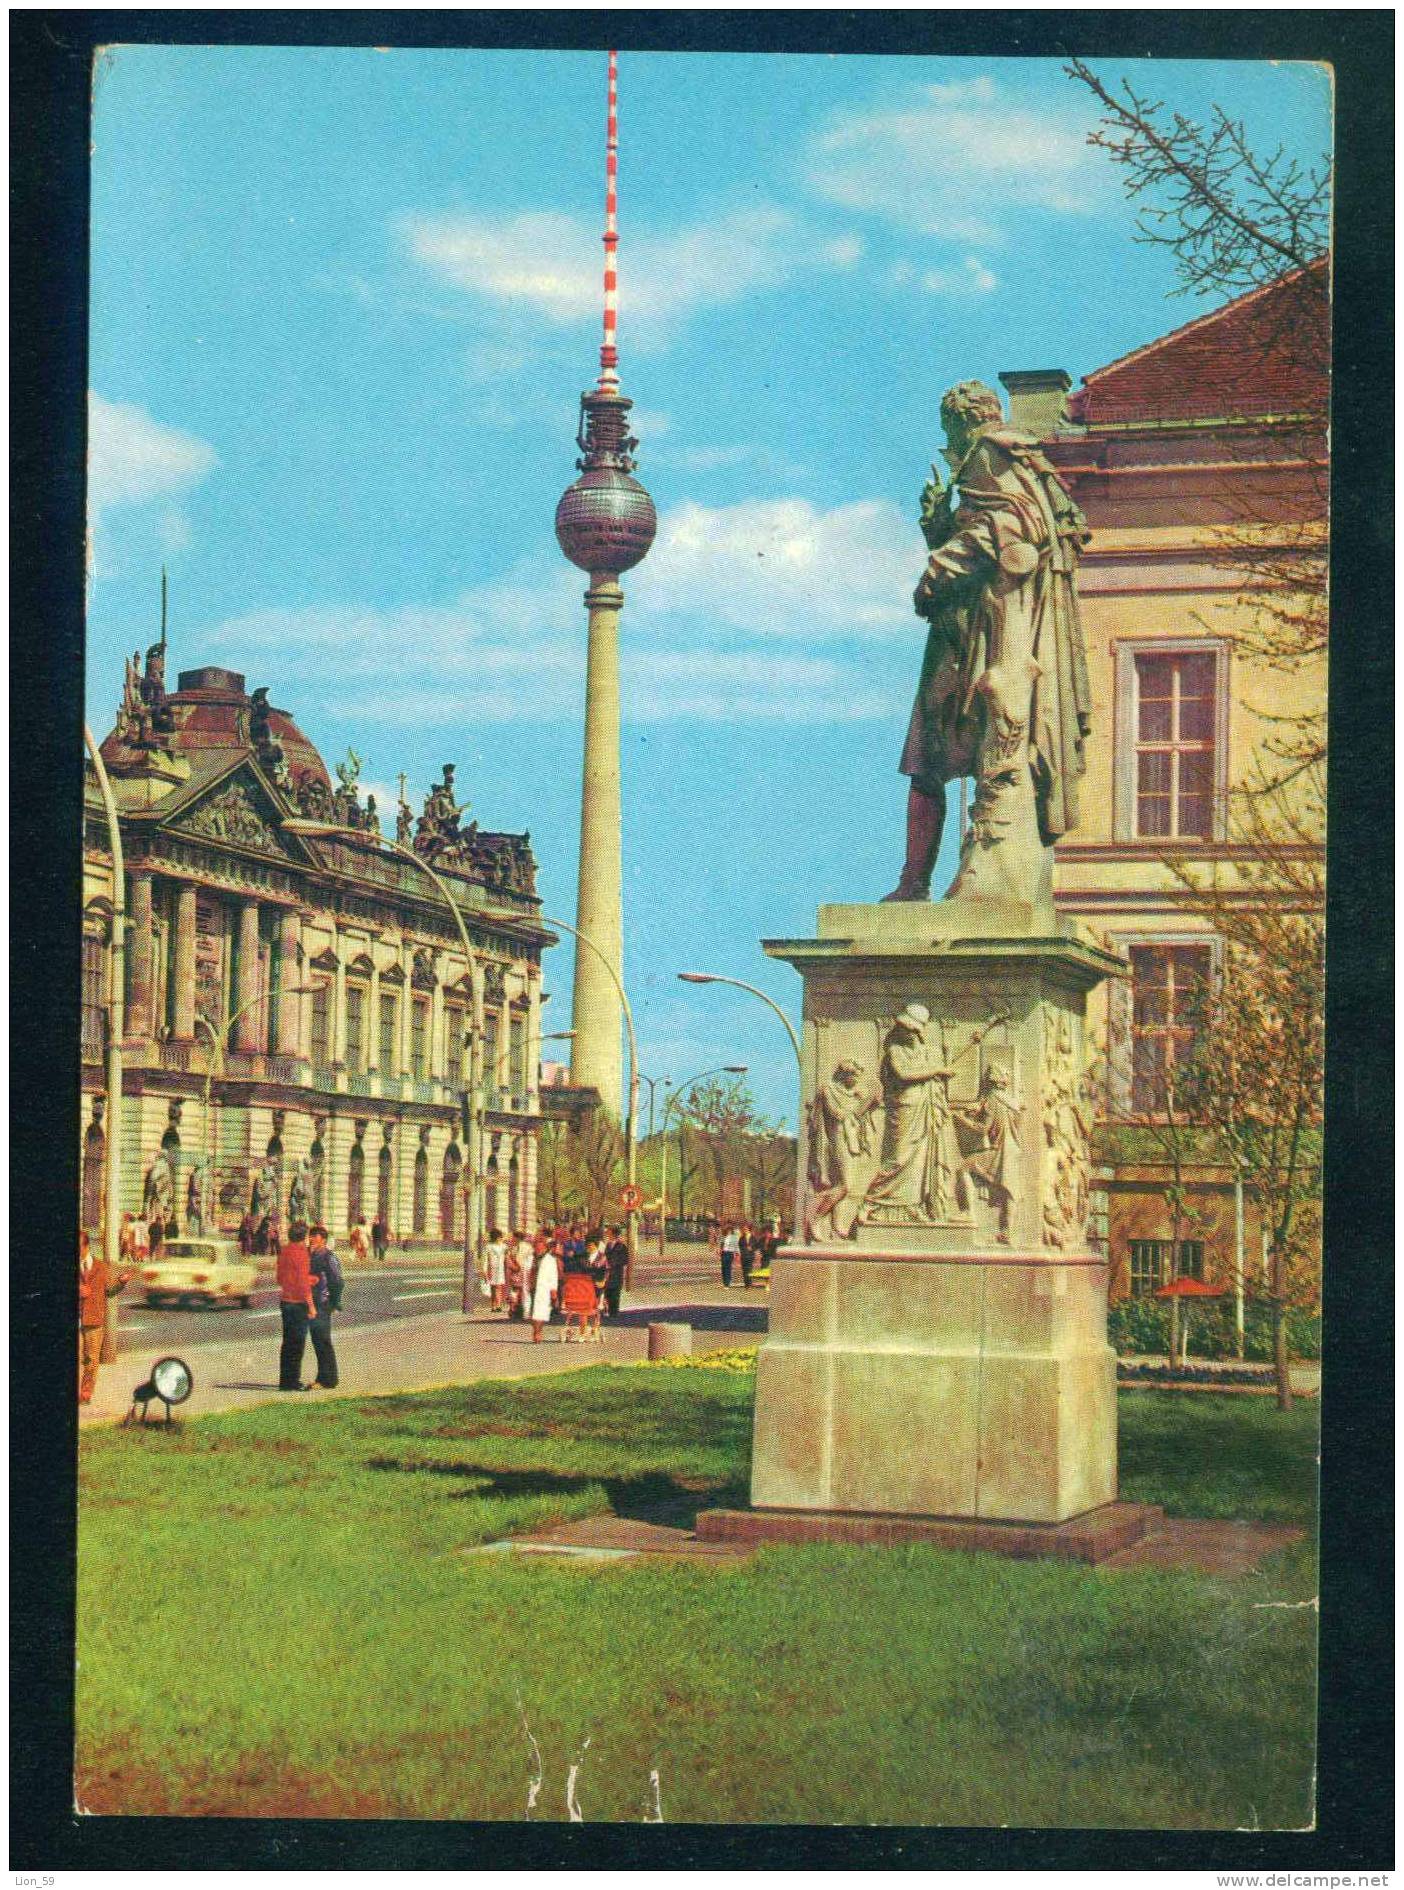 56449 // BERLIN - 1977 UKW , TV TOWER , MUSEUM DEUTSCHE GESCHICHTE Deutschland Germany Allemagne Germania - Lettres & Documents